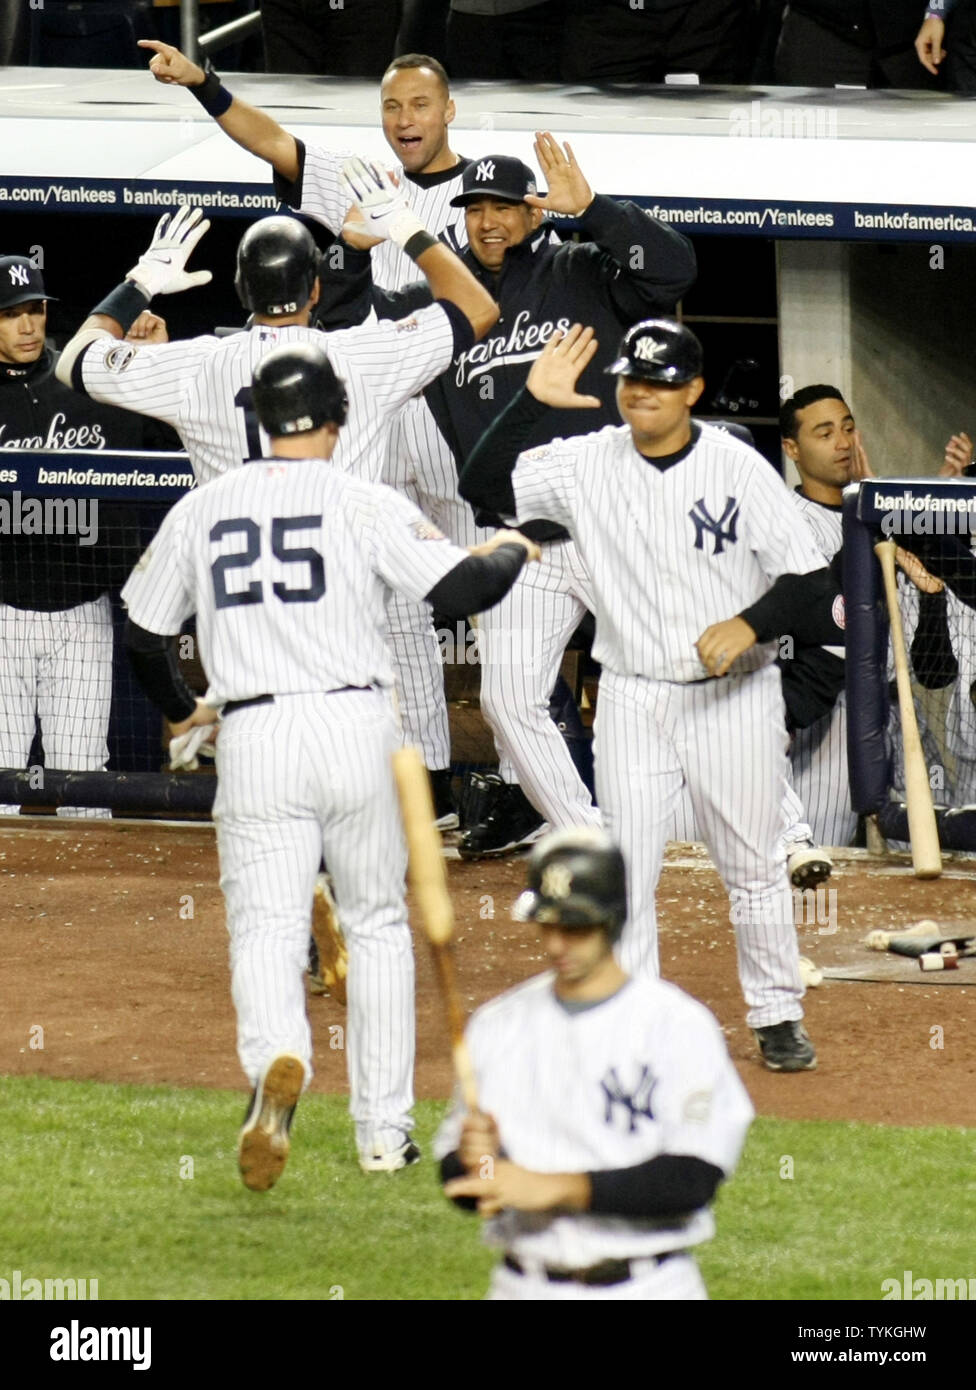 A Look into Yankees past: Hideki Matsui's incredible 2009 WS Performance